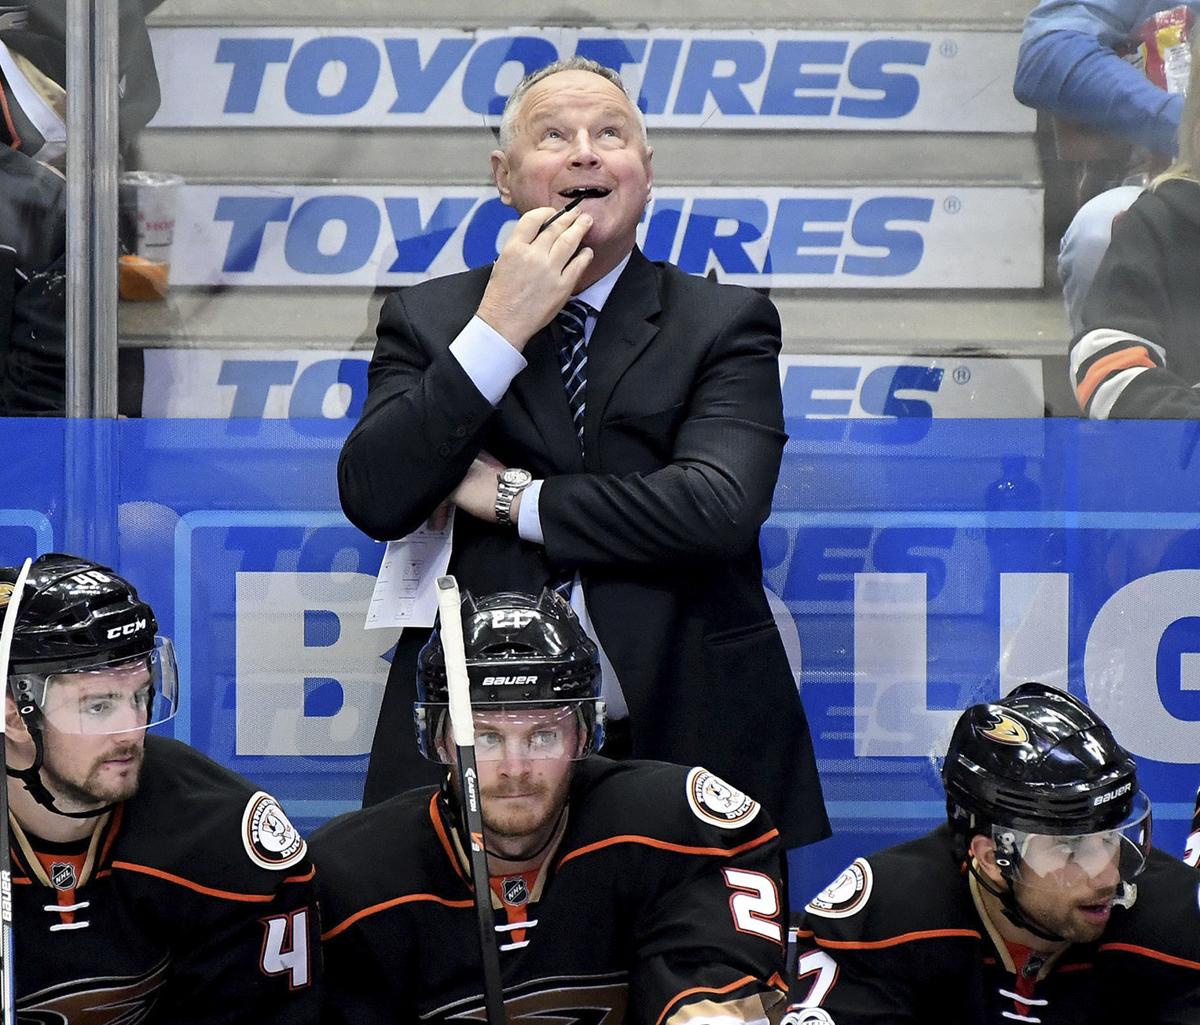 Ducks' goalies coach takes unusual path to NHL - Los Angeles Times